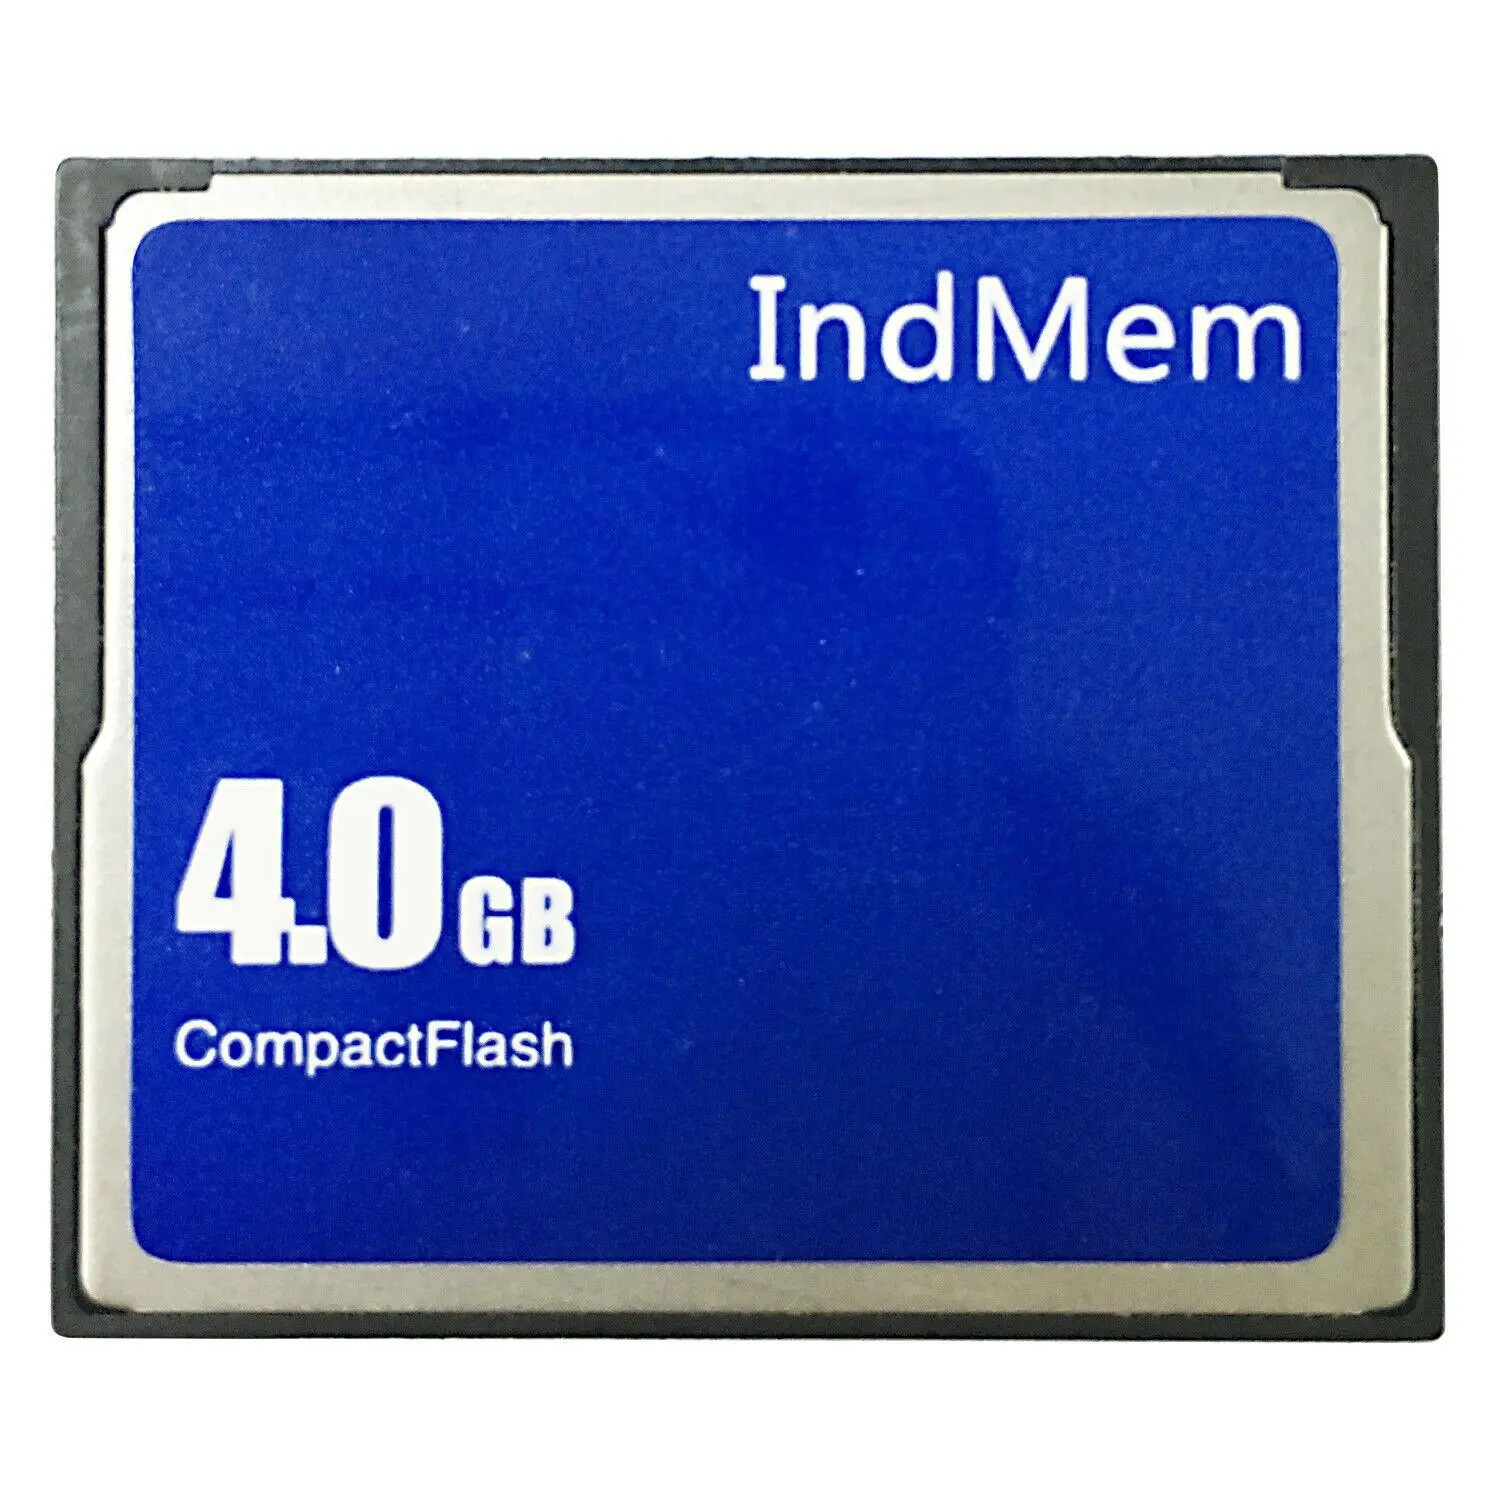 IndMem Reală Capacitate de 4GB Card CF Card Compact Flash Industrial CompactFlash CF Card de Memorie Flash SLC Innodisk Control ATA